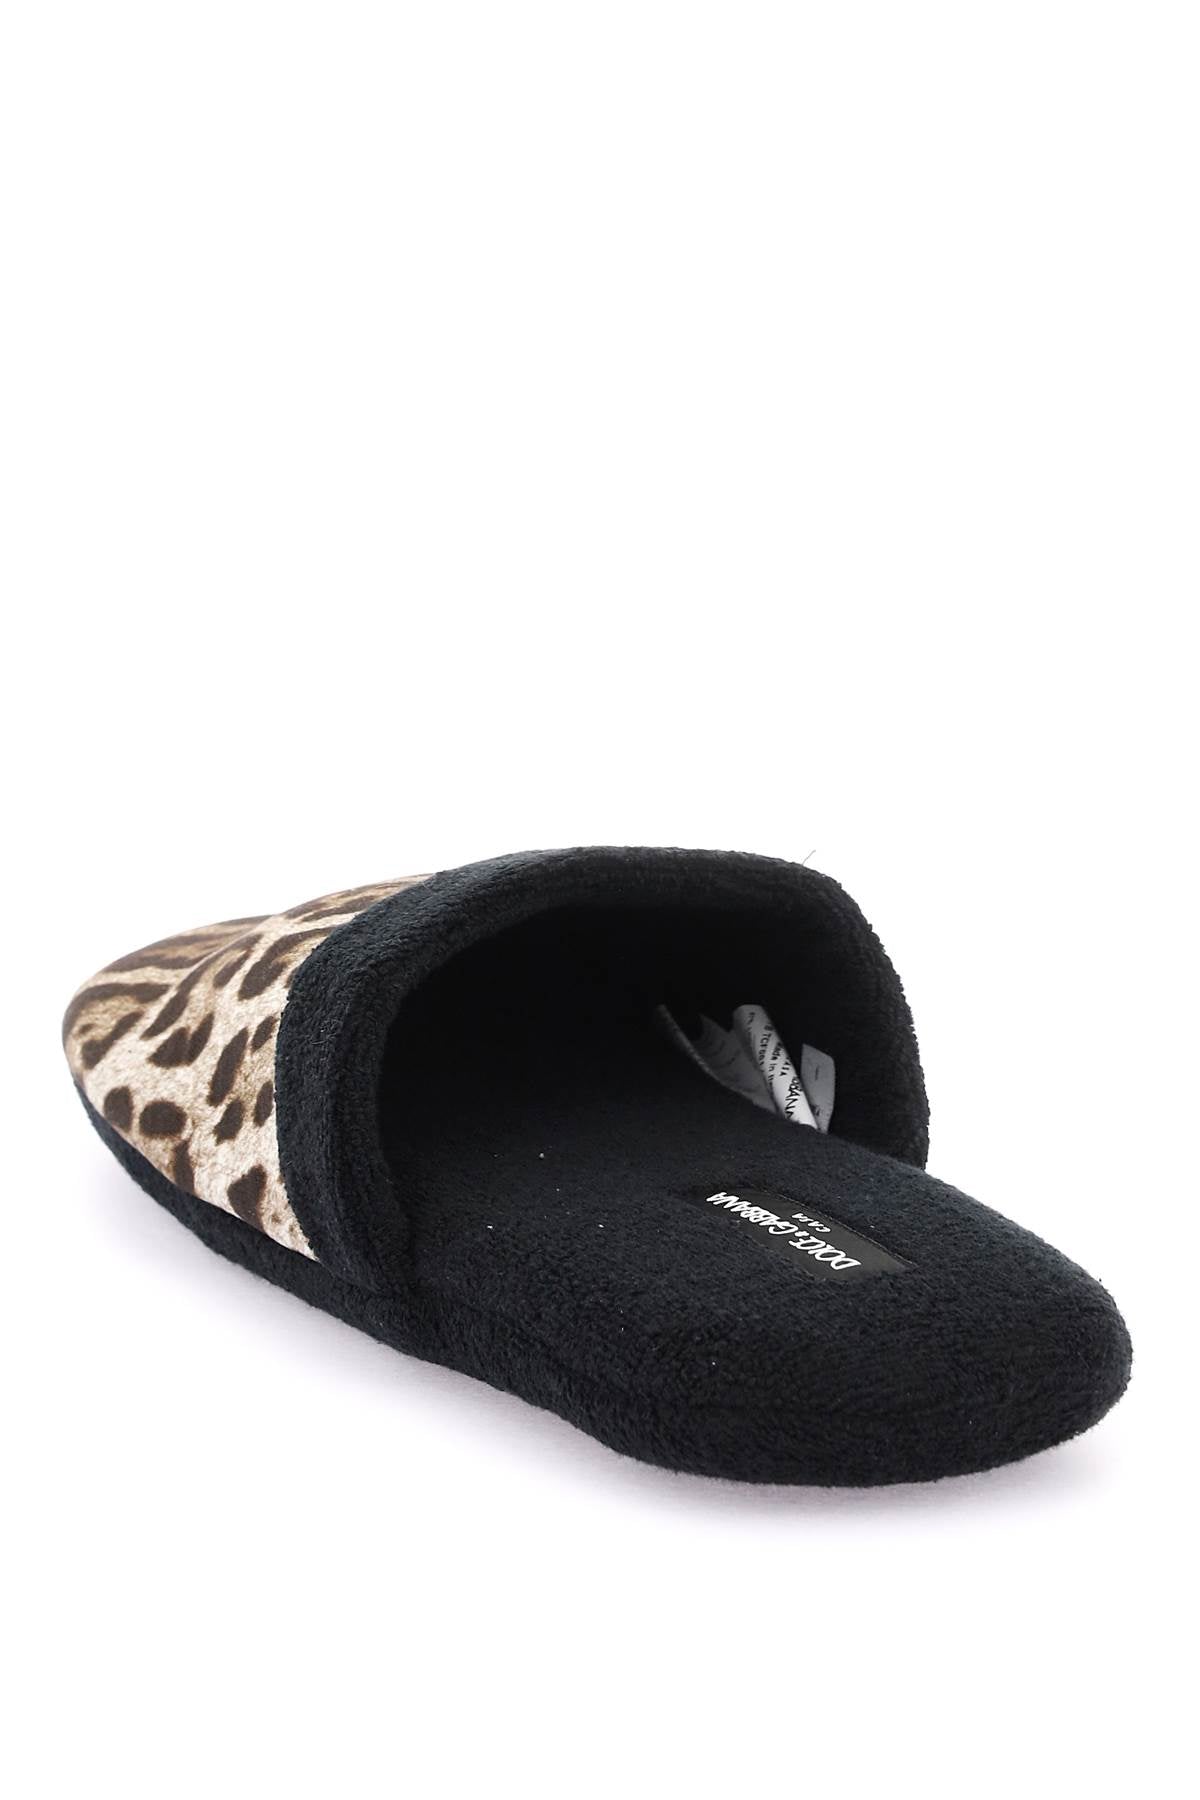 Dolce & gabbana 'leopardo' terry slippers-2